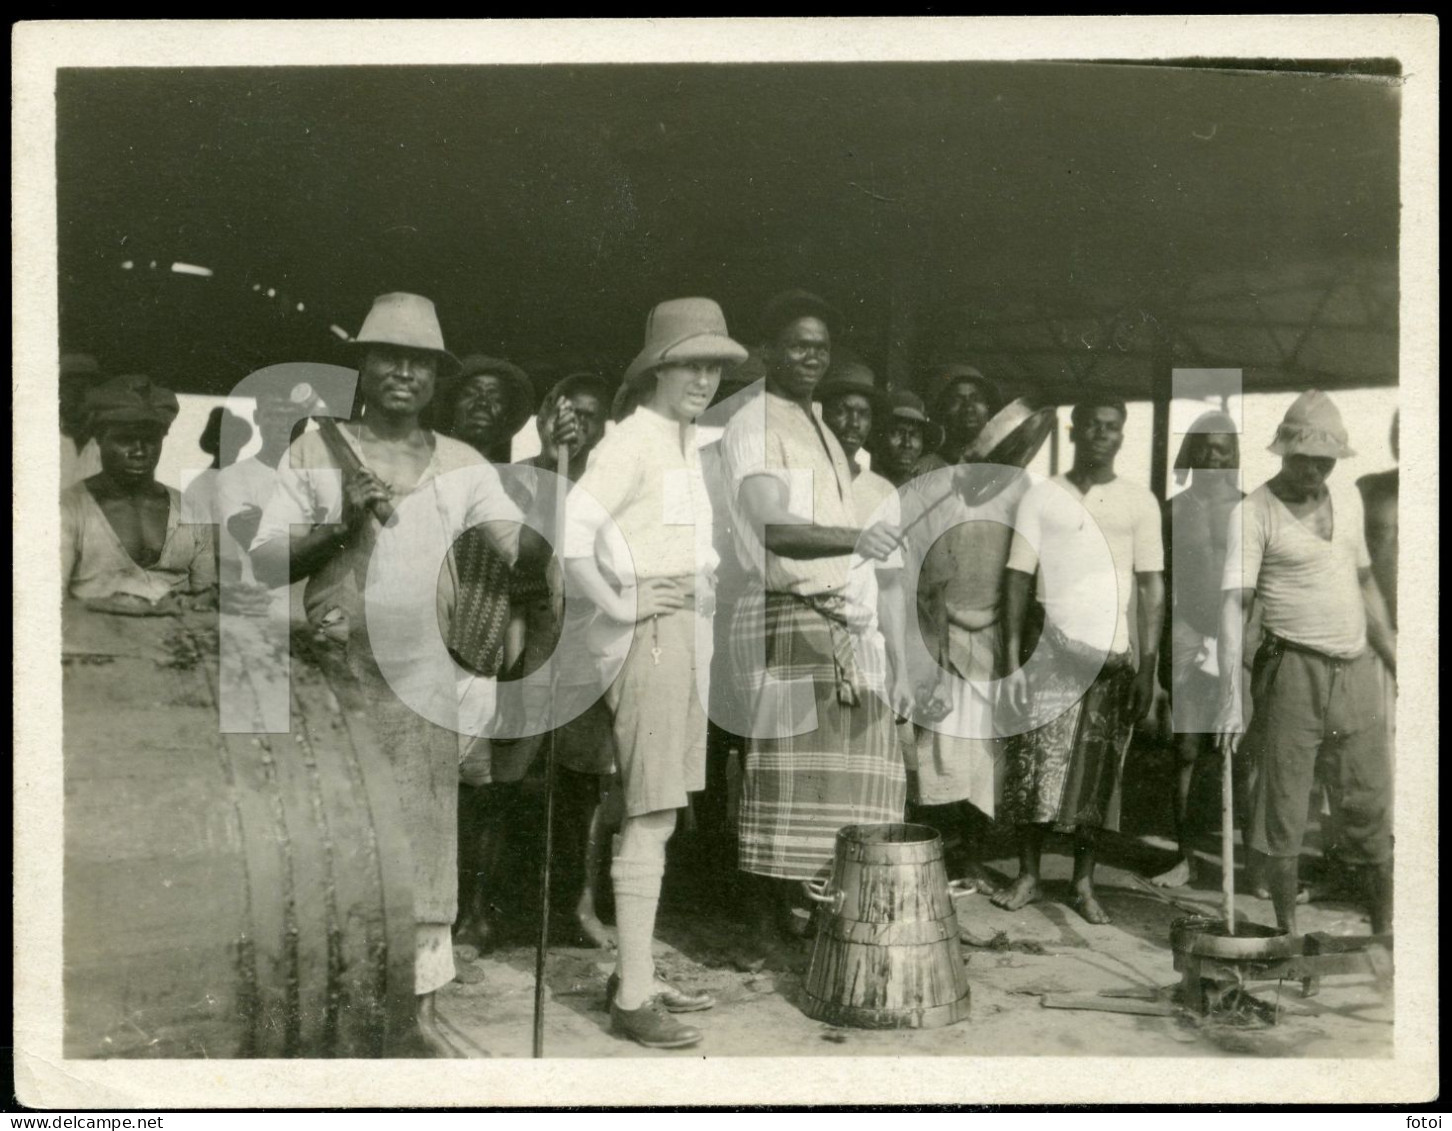 30s ORIGINAL FOTO PHOTO PALM OIL OLEO DE PALMA ANGOLA AFRICA AFRIQUE AT179 - Afrika